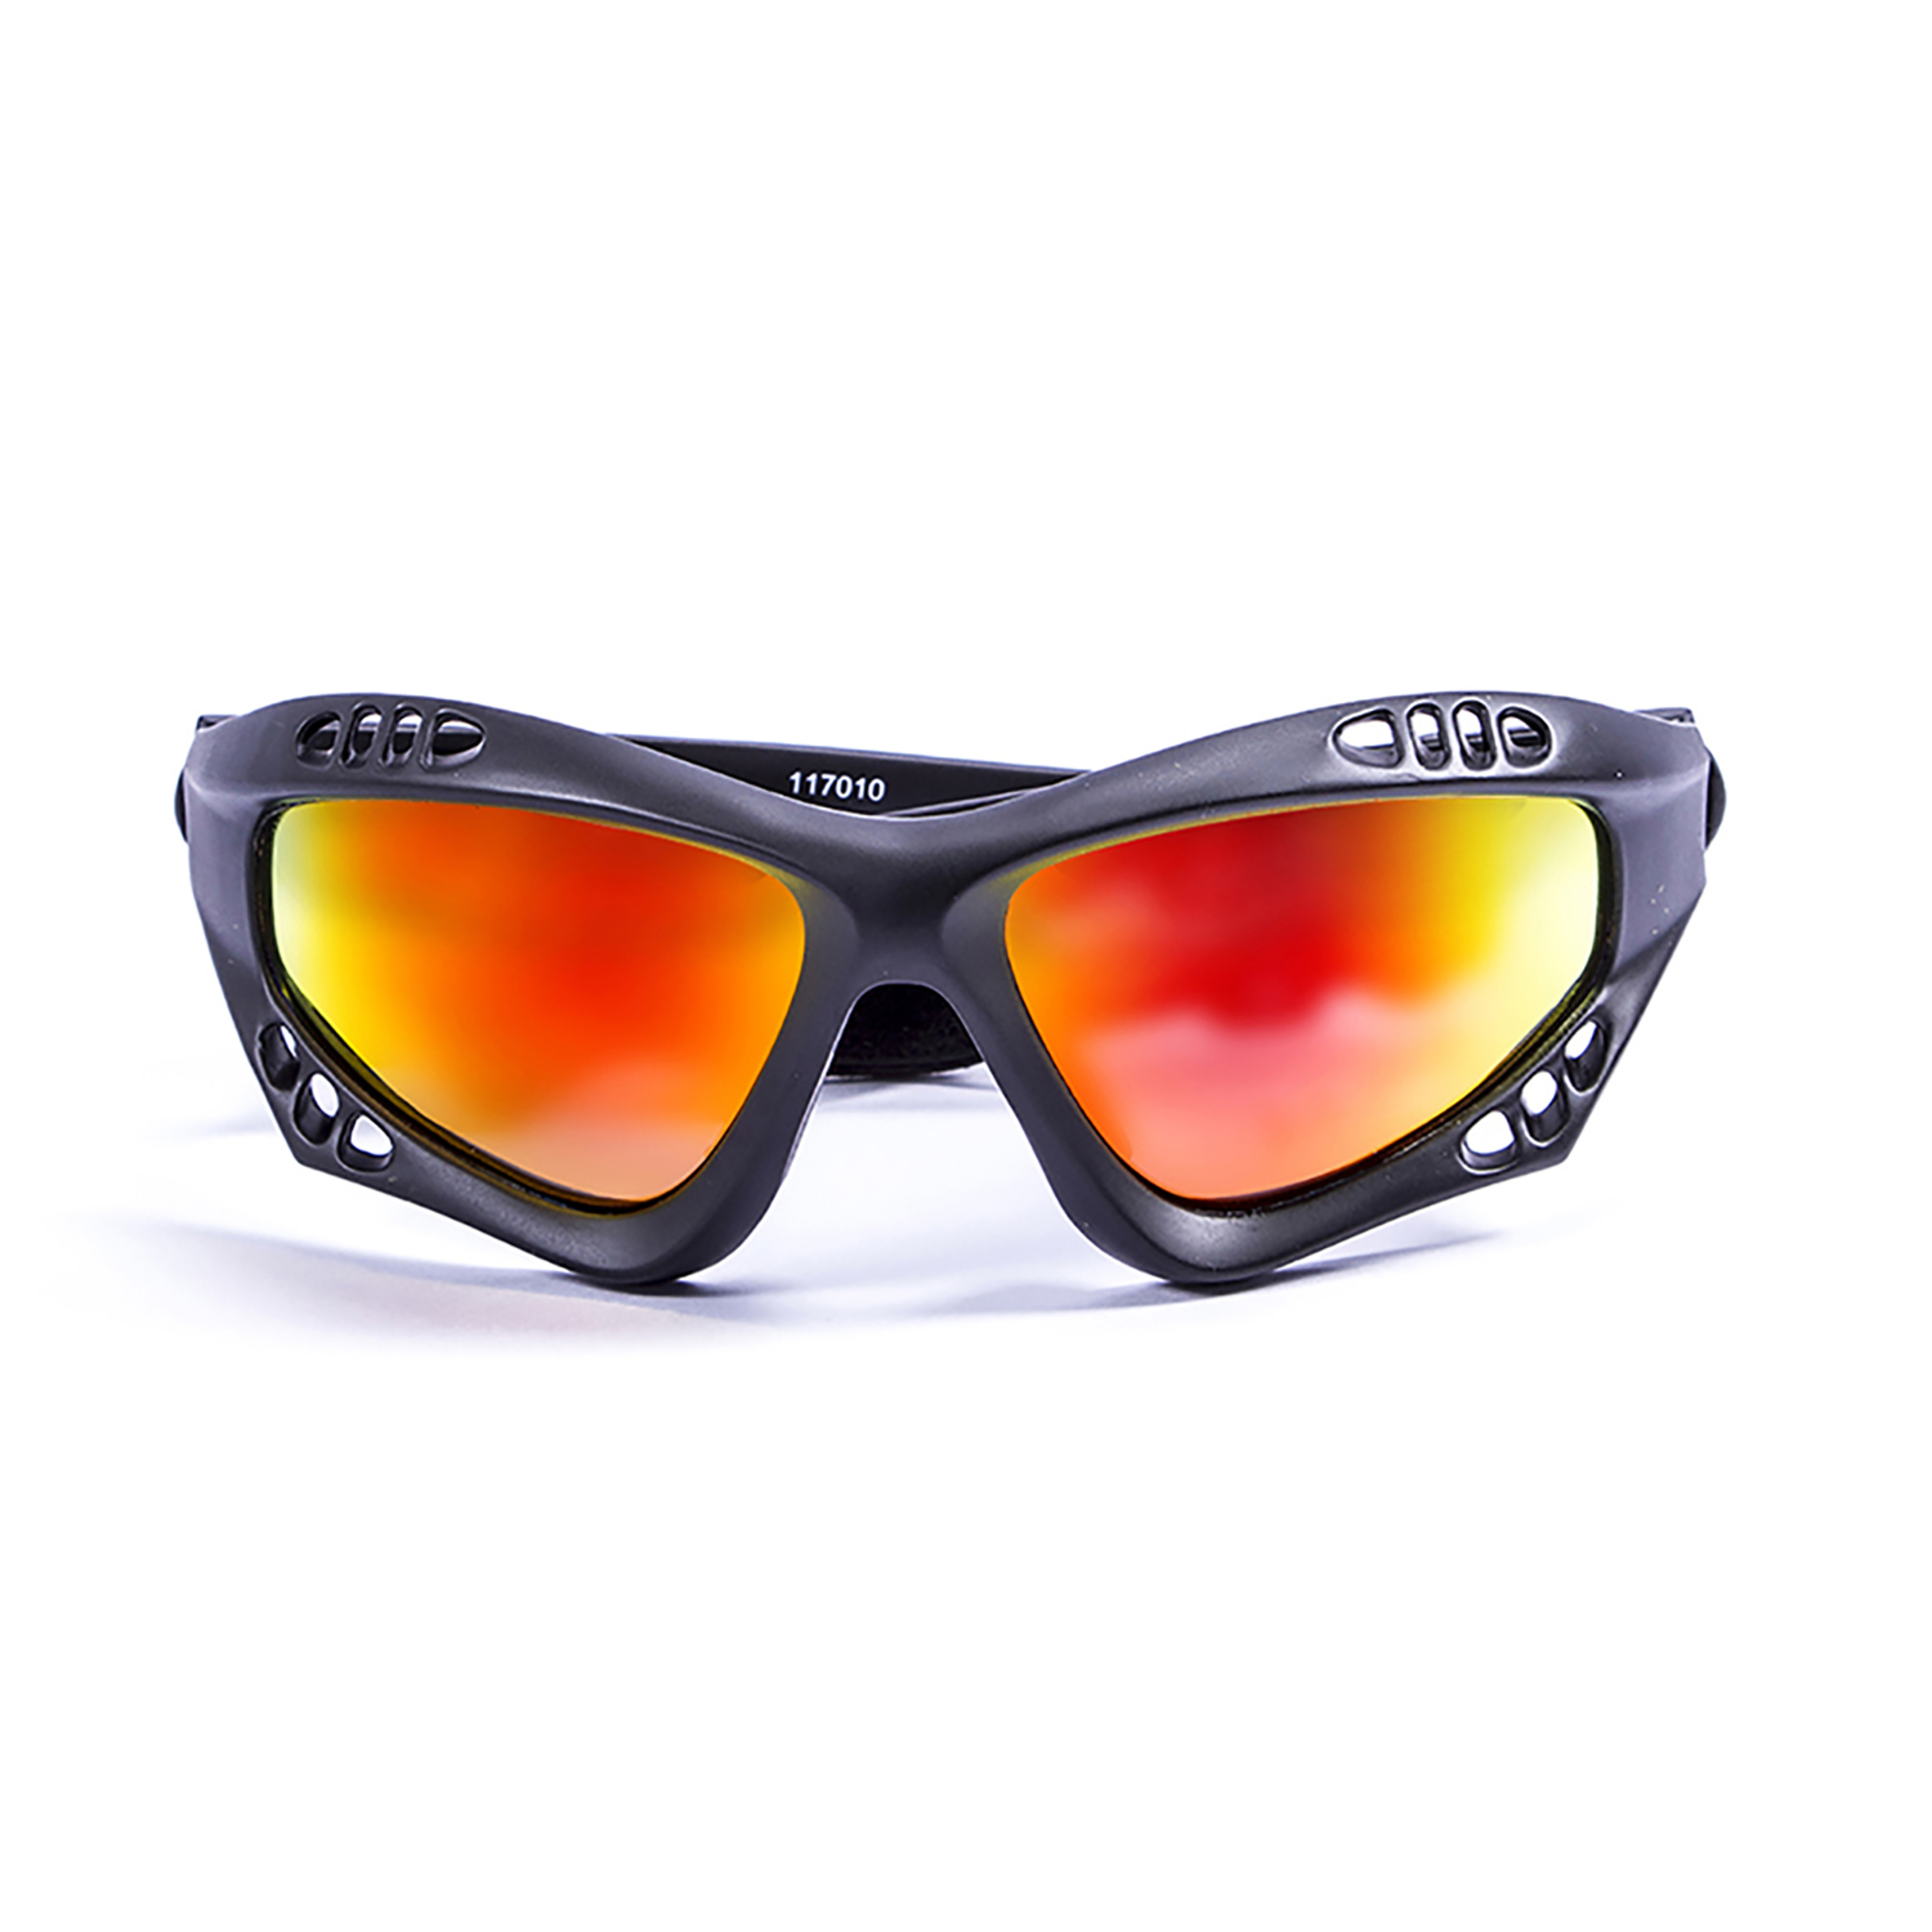 Gafas De Sol Técnicas Para La Práctica De Deportes De Agua Australia Ocean Sunglasses